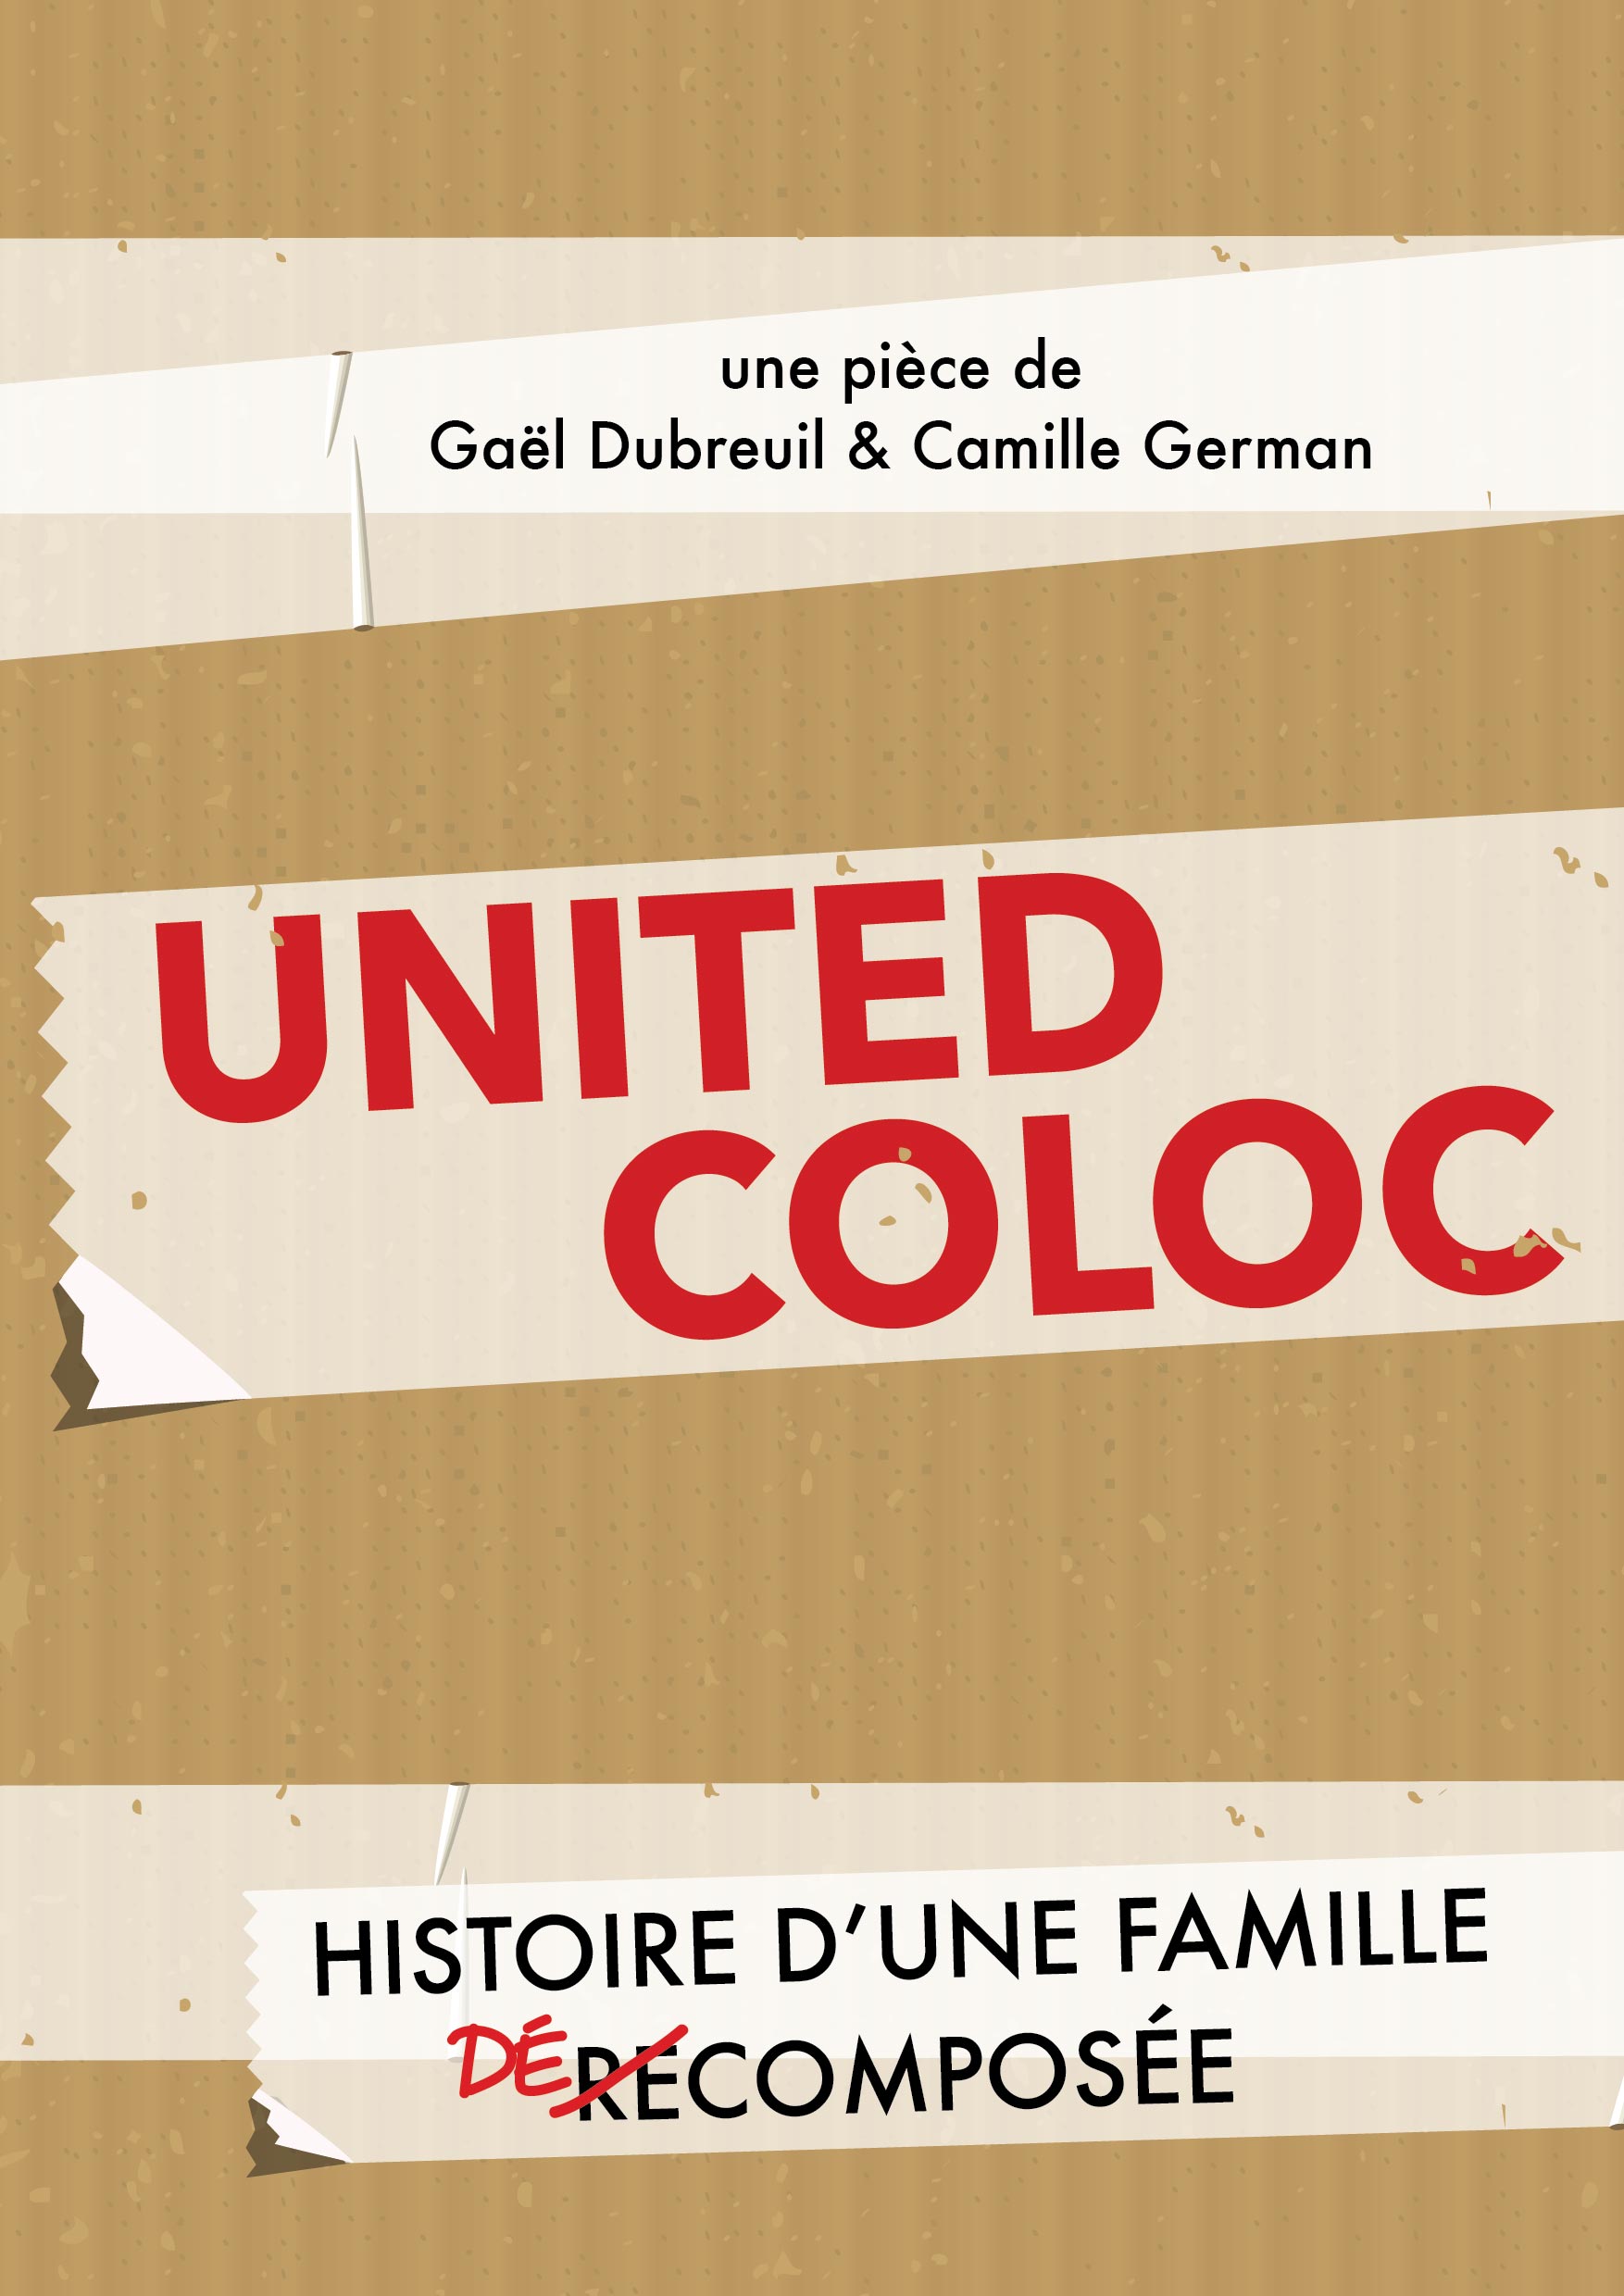 united coloc v1-14